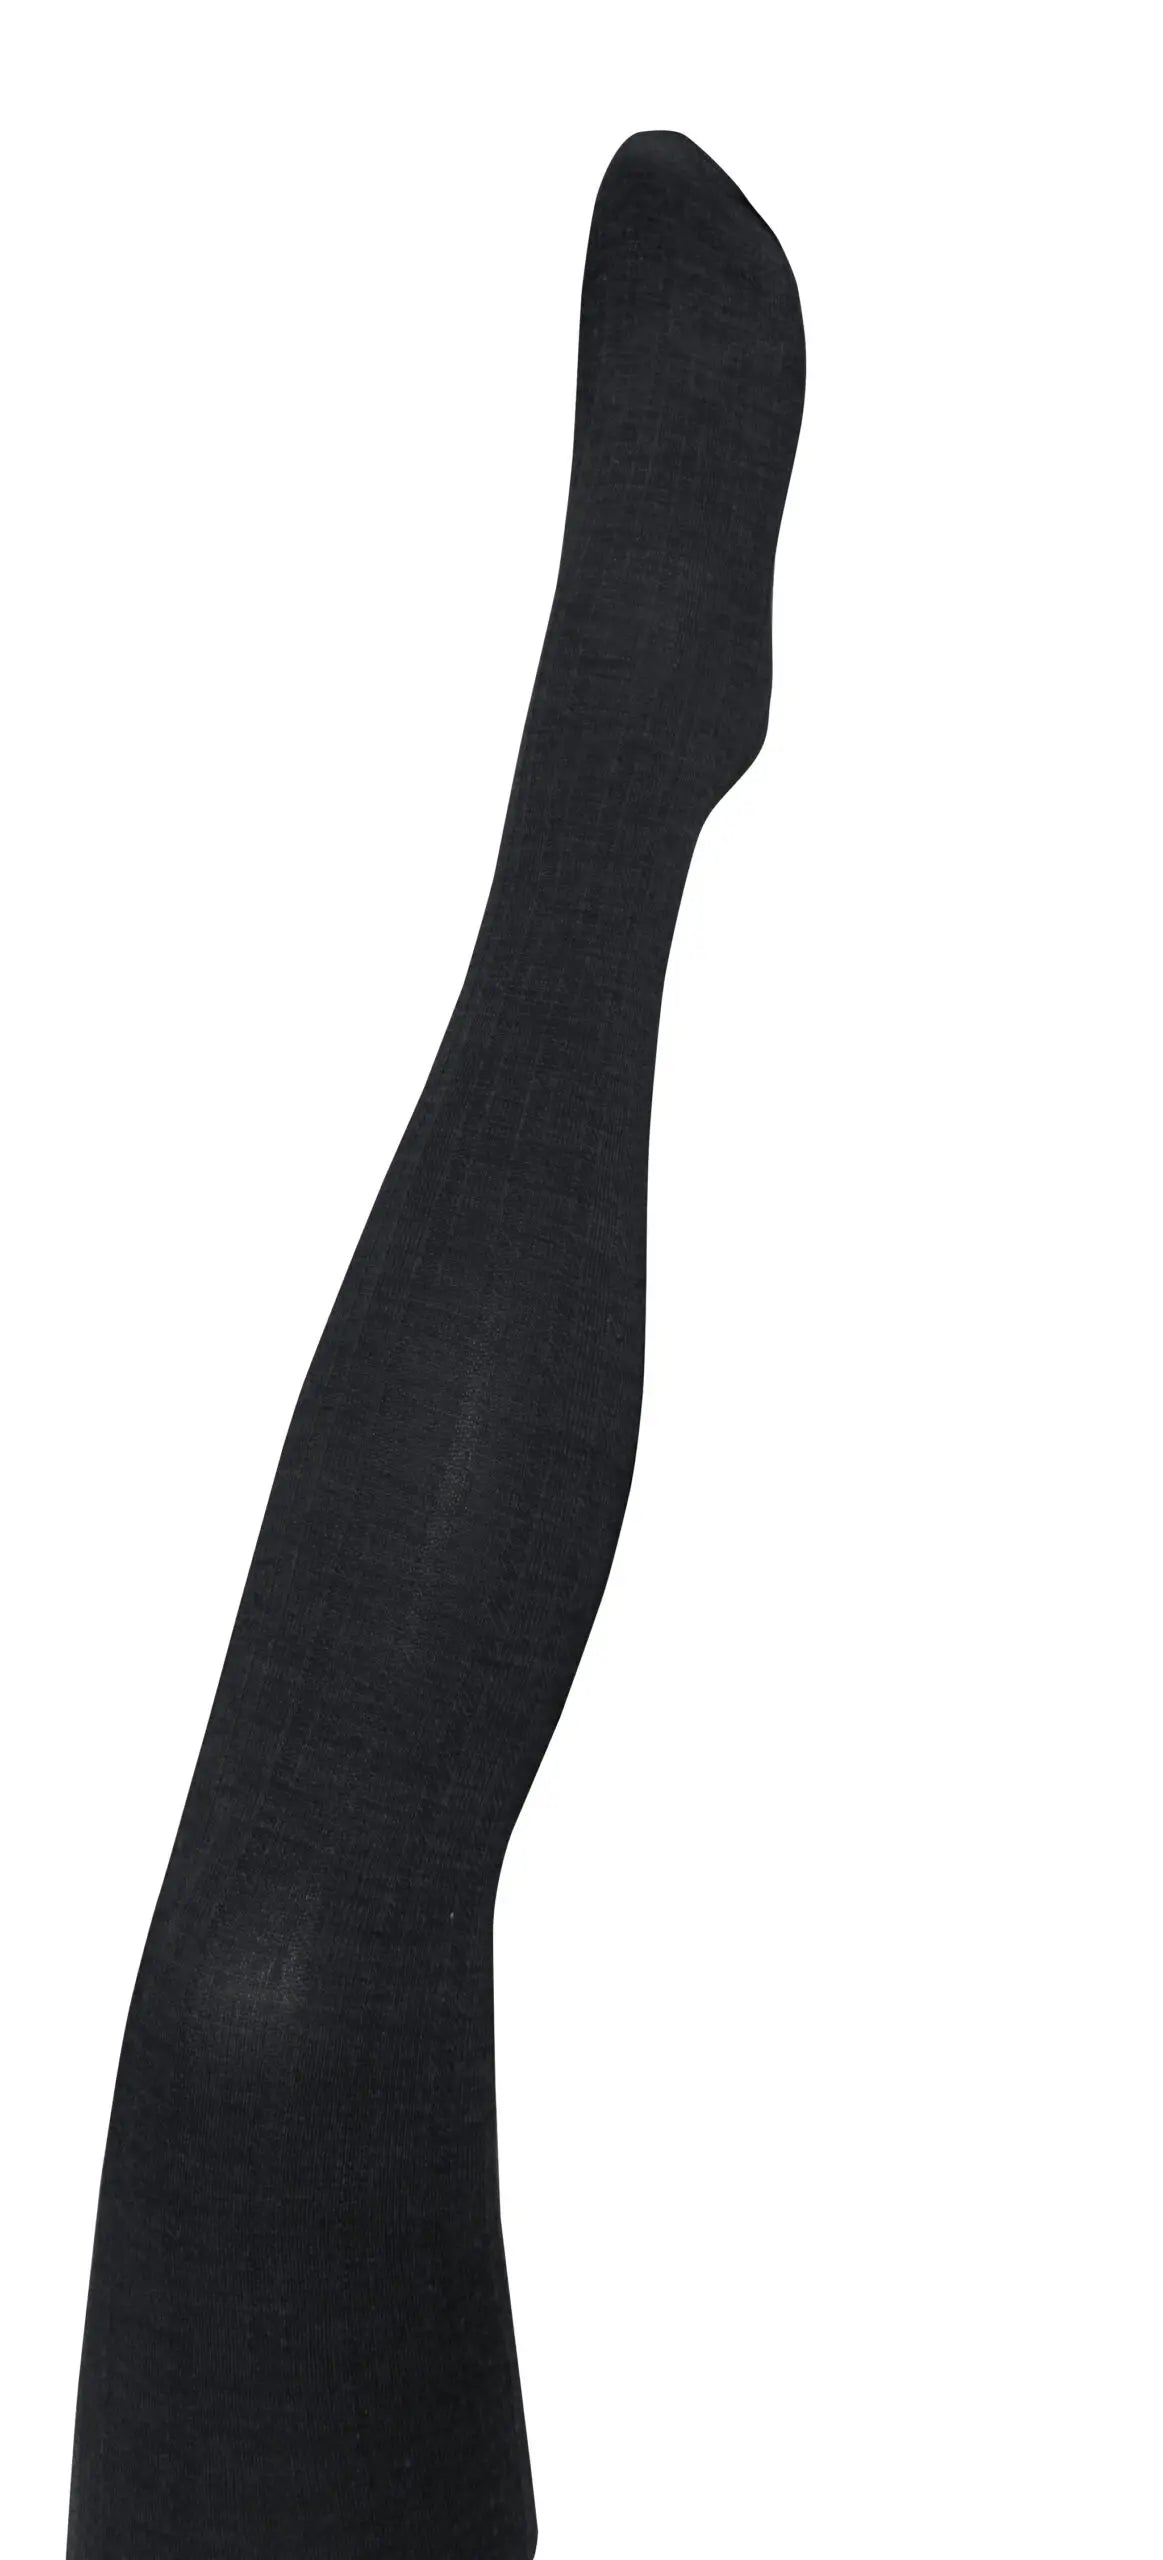 ‘Staple’ Merino Wool Tights - Tightology Tights Tightology Black Small/Medium 